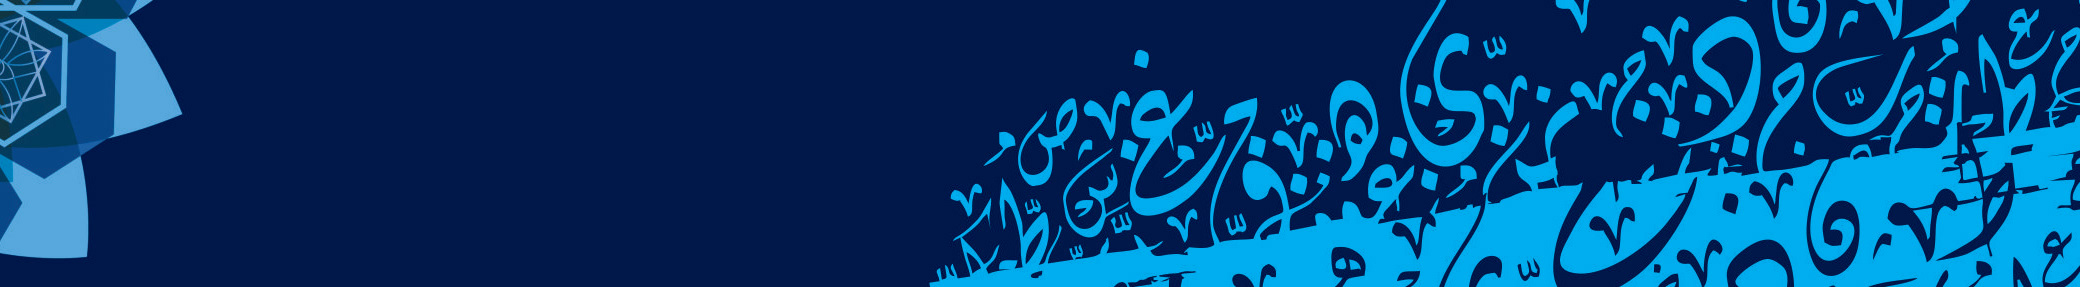 raed abojeab's profile banner